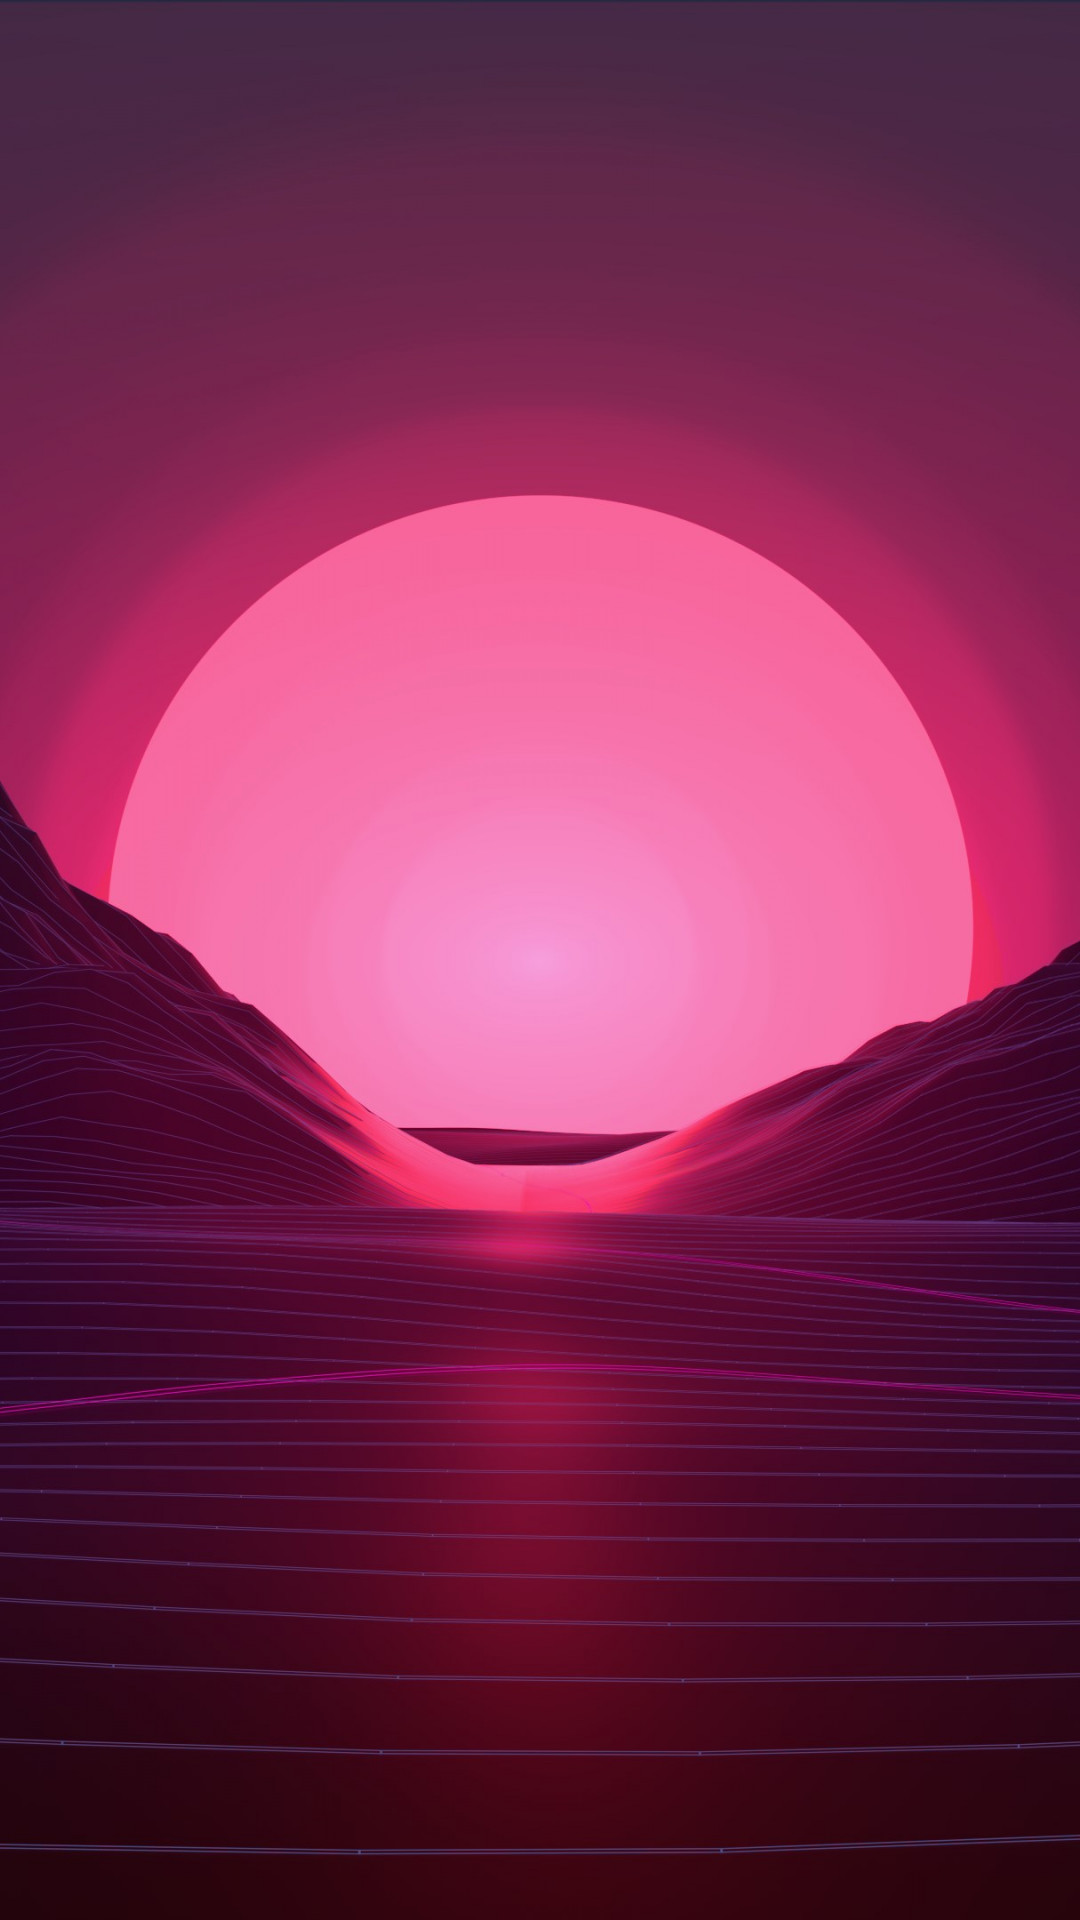 Download wallpaper Neon sunset 1080x1920 1080x1920